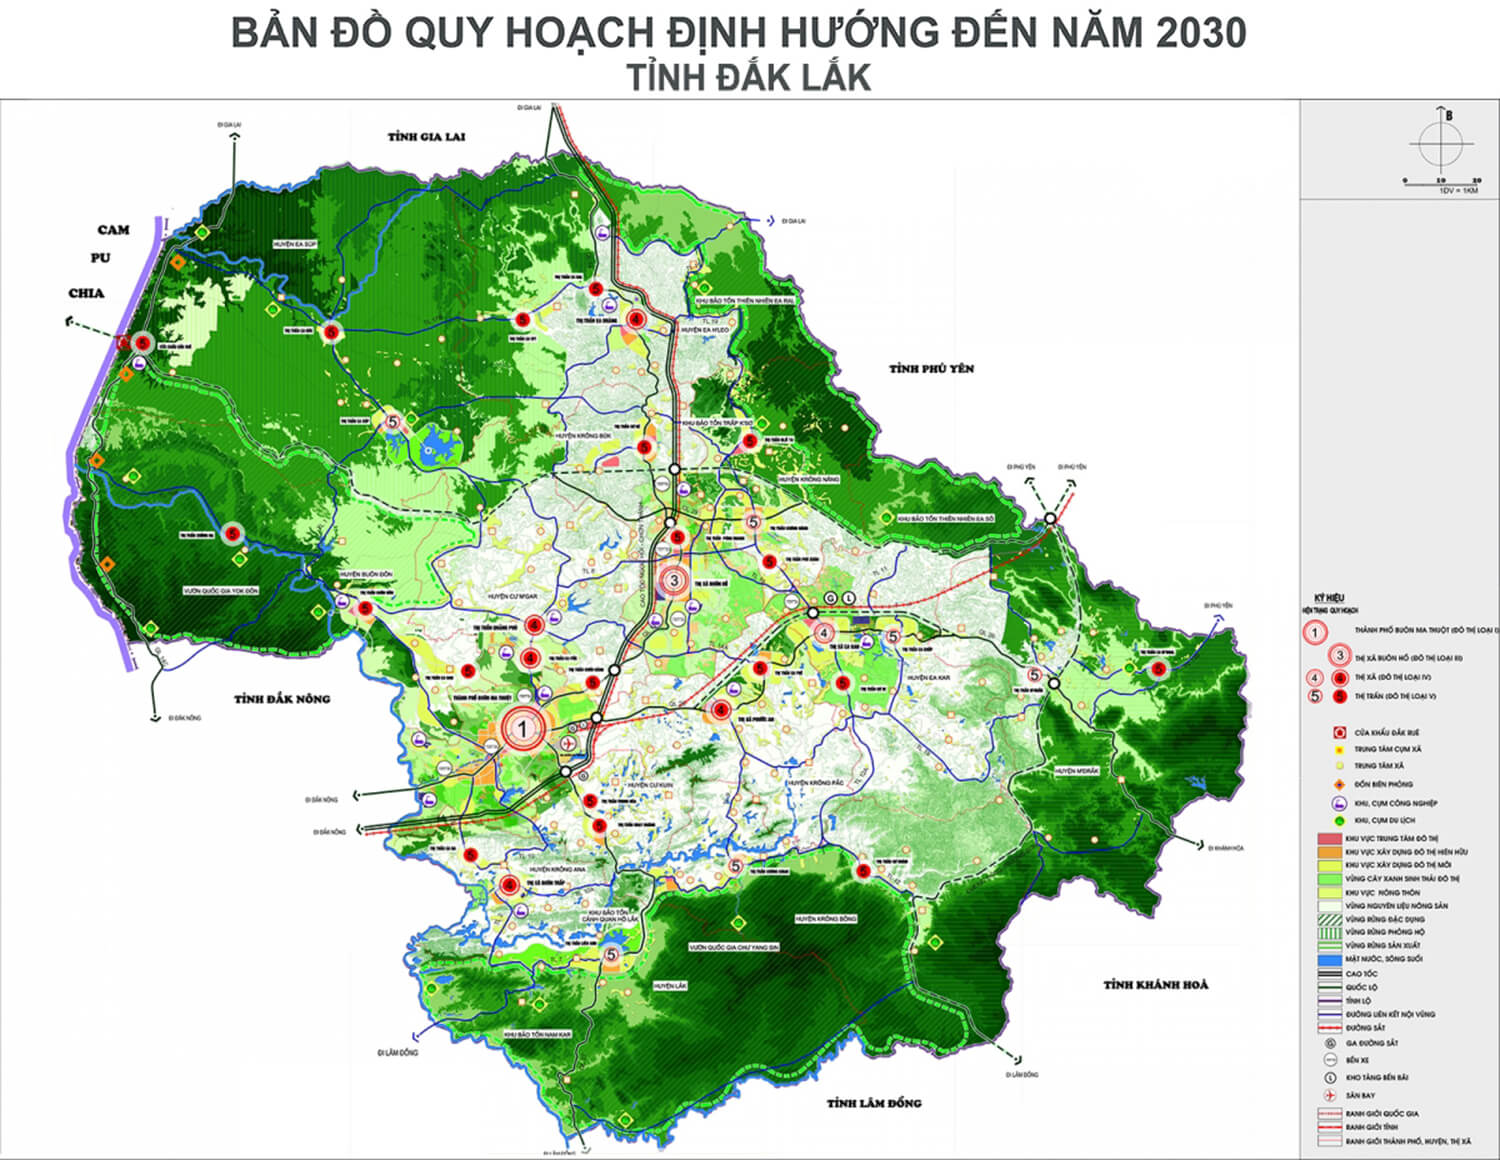 ban-do-quy-hoach-huyen-krong-nang-tinh-dak-lak-den-nam-2030